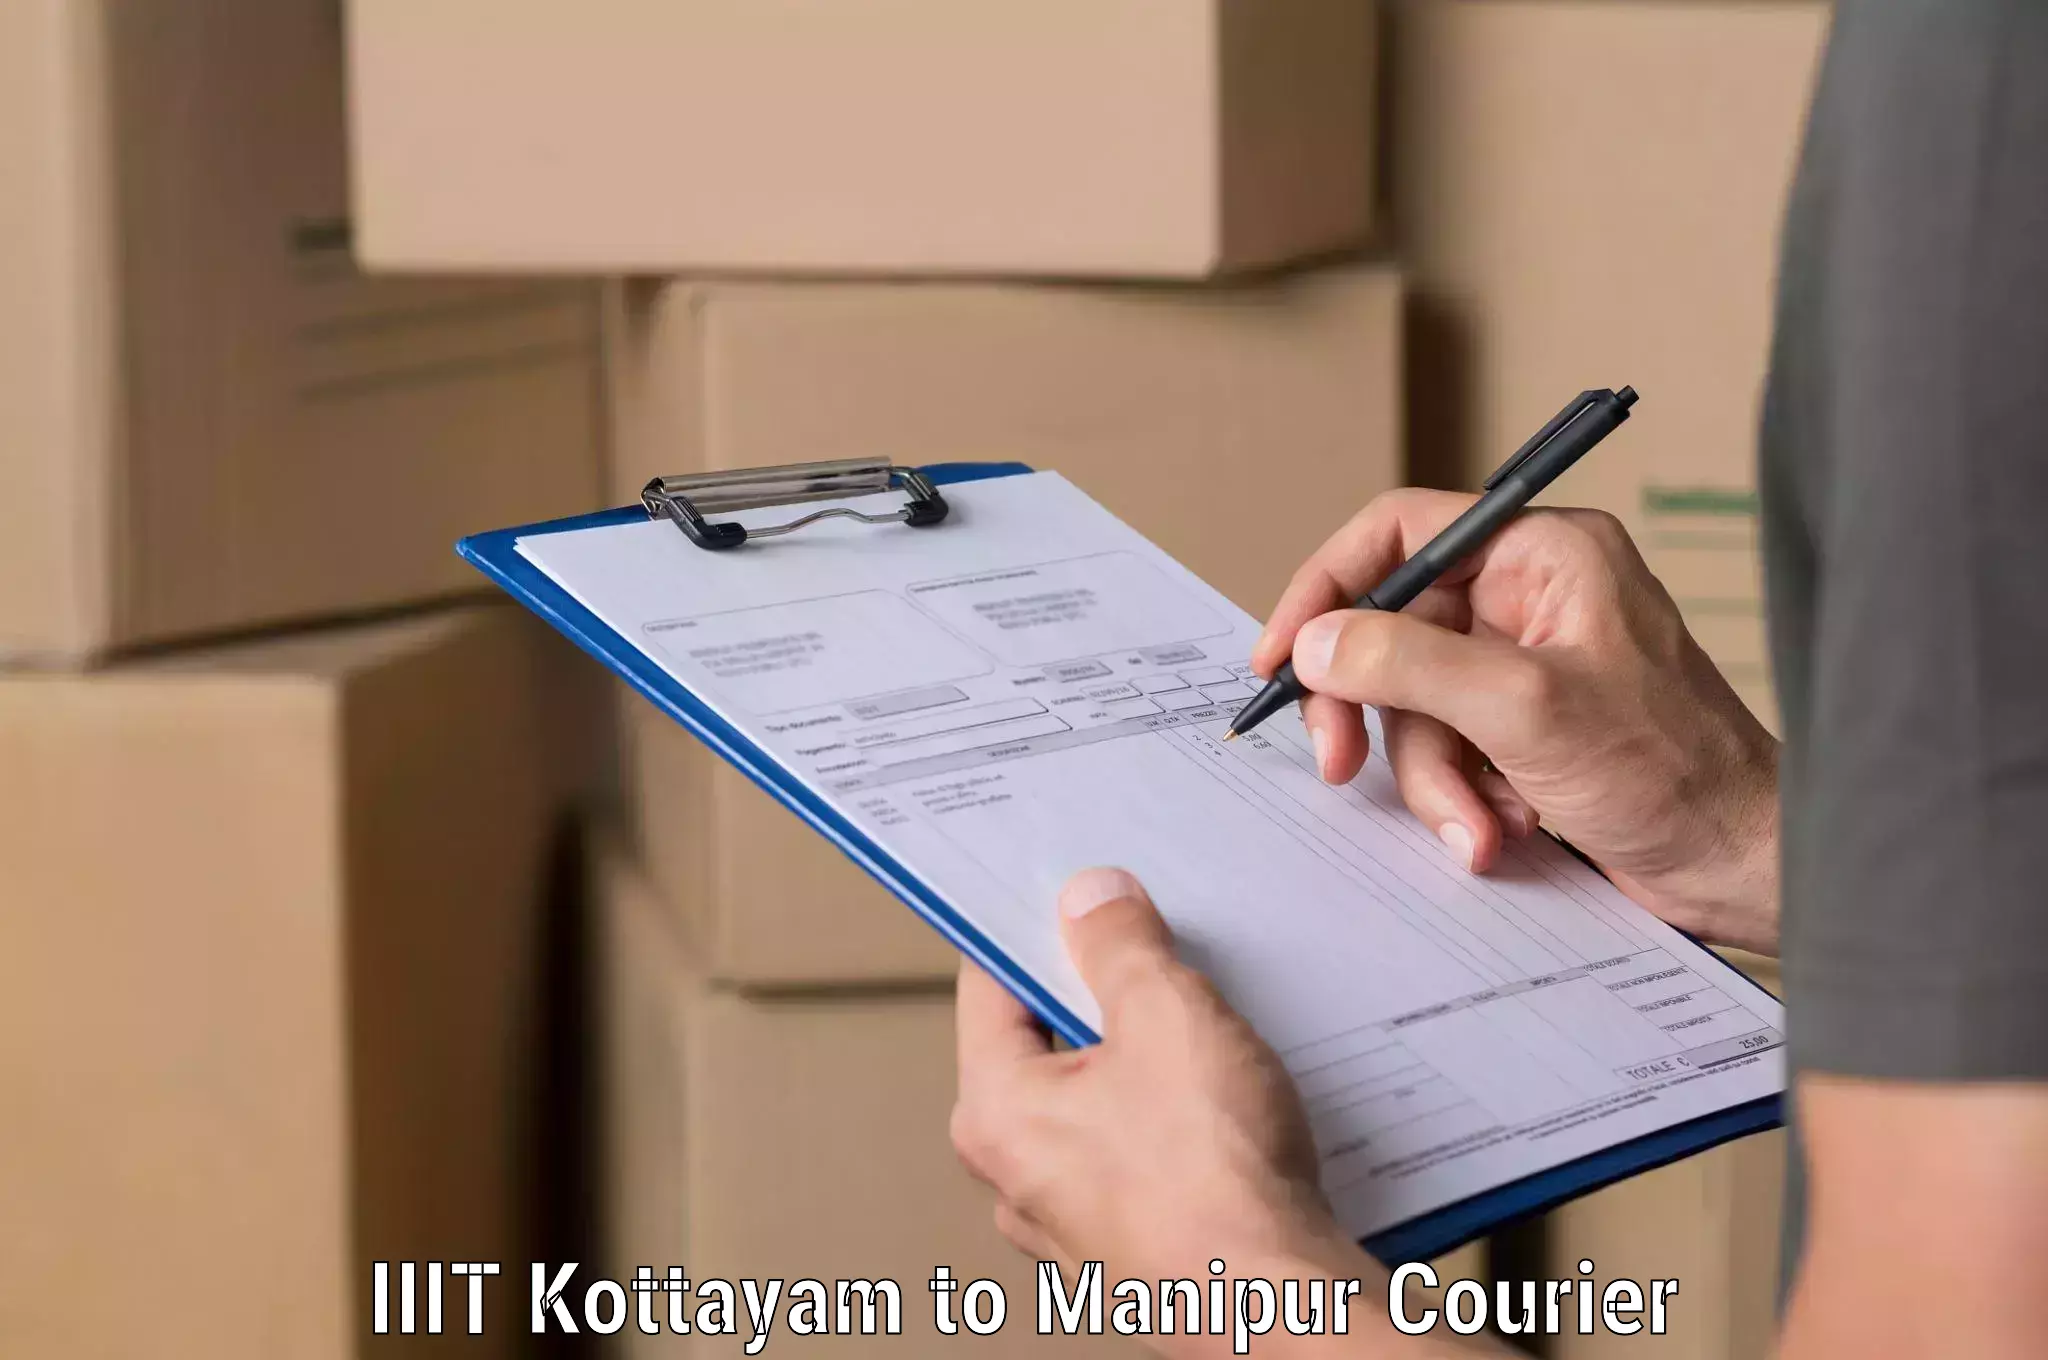 24/7 courier service IIIT Kottayam to Kanti